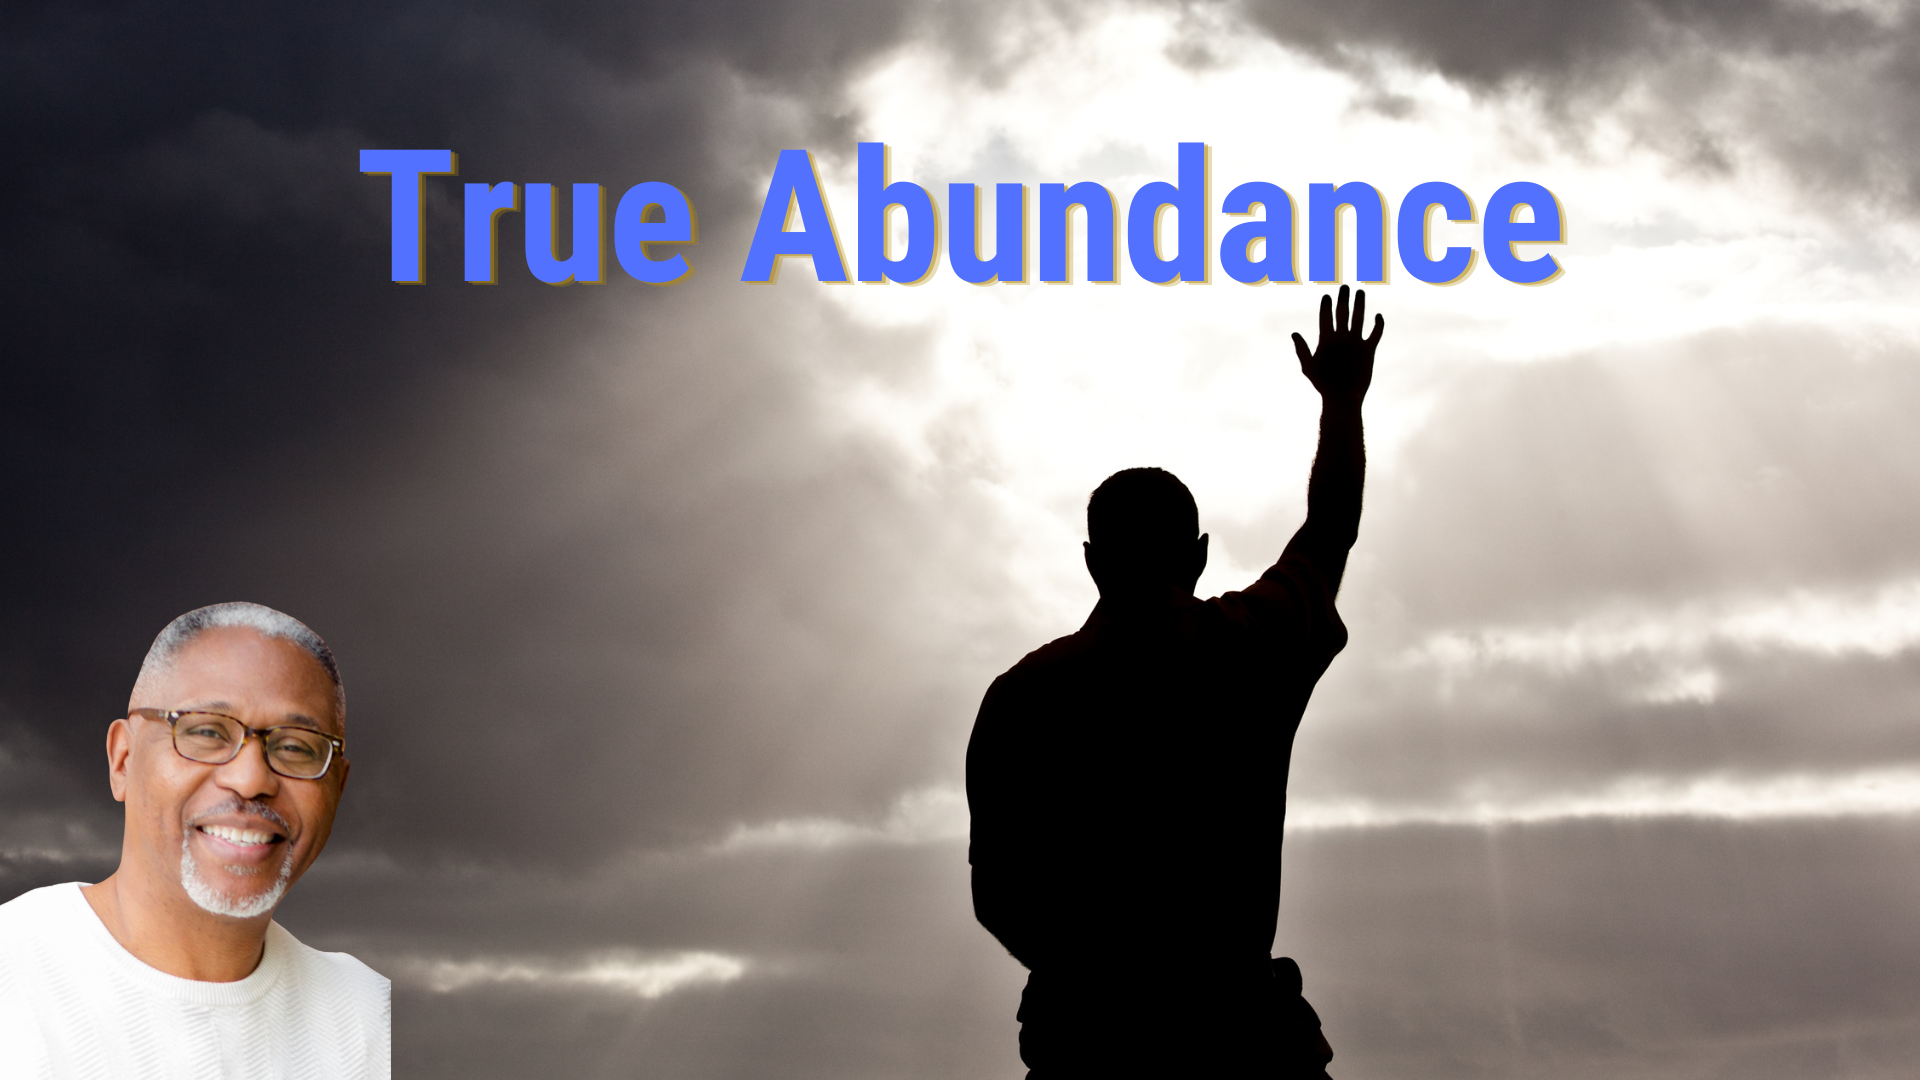 True Abundance blog featured image